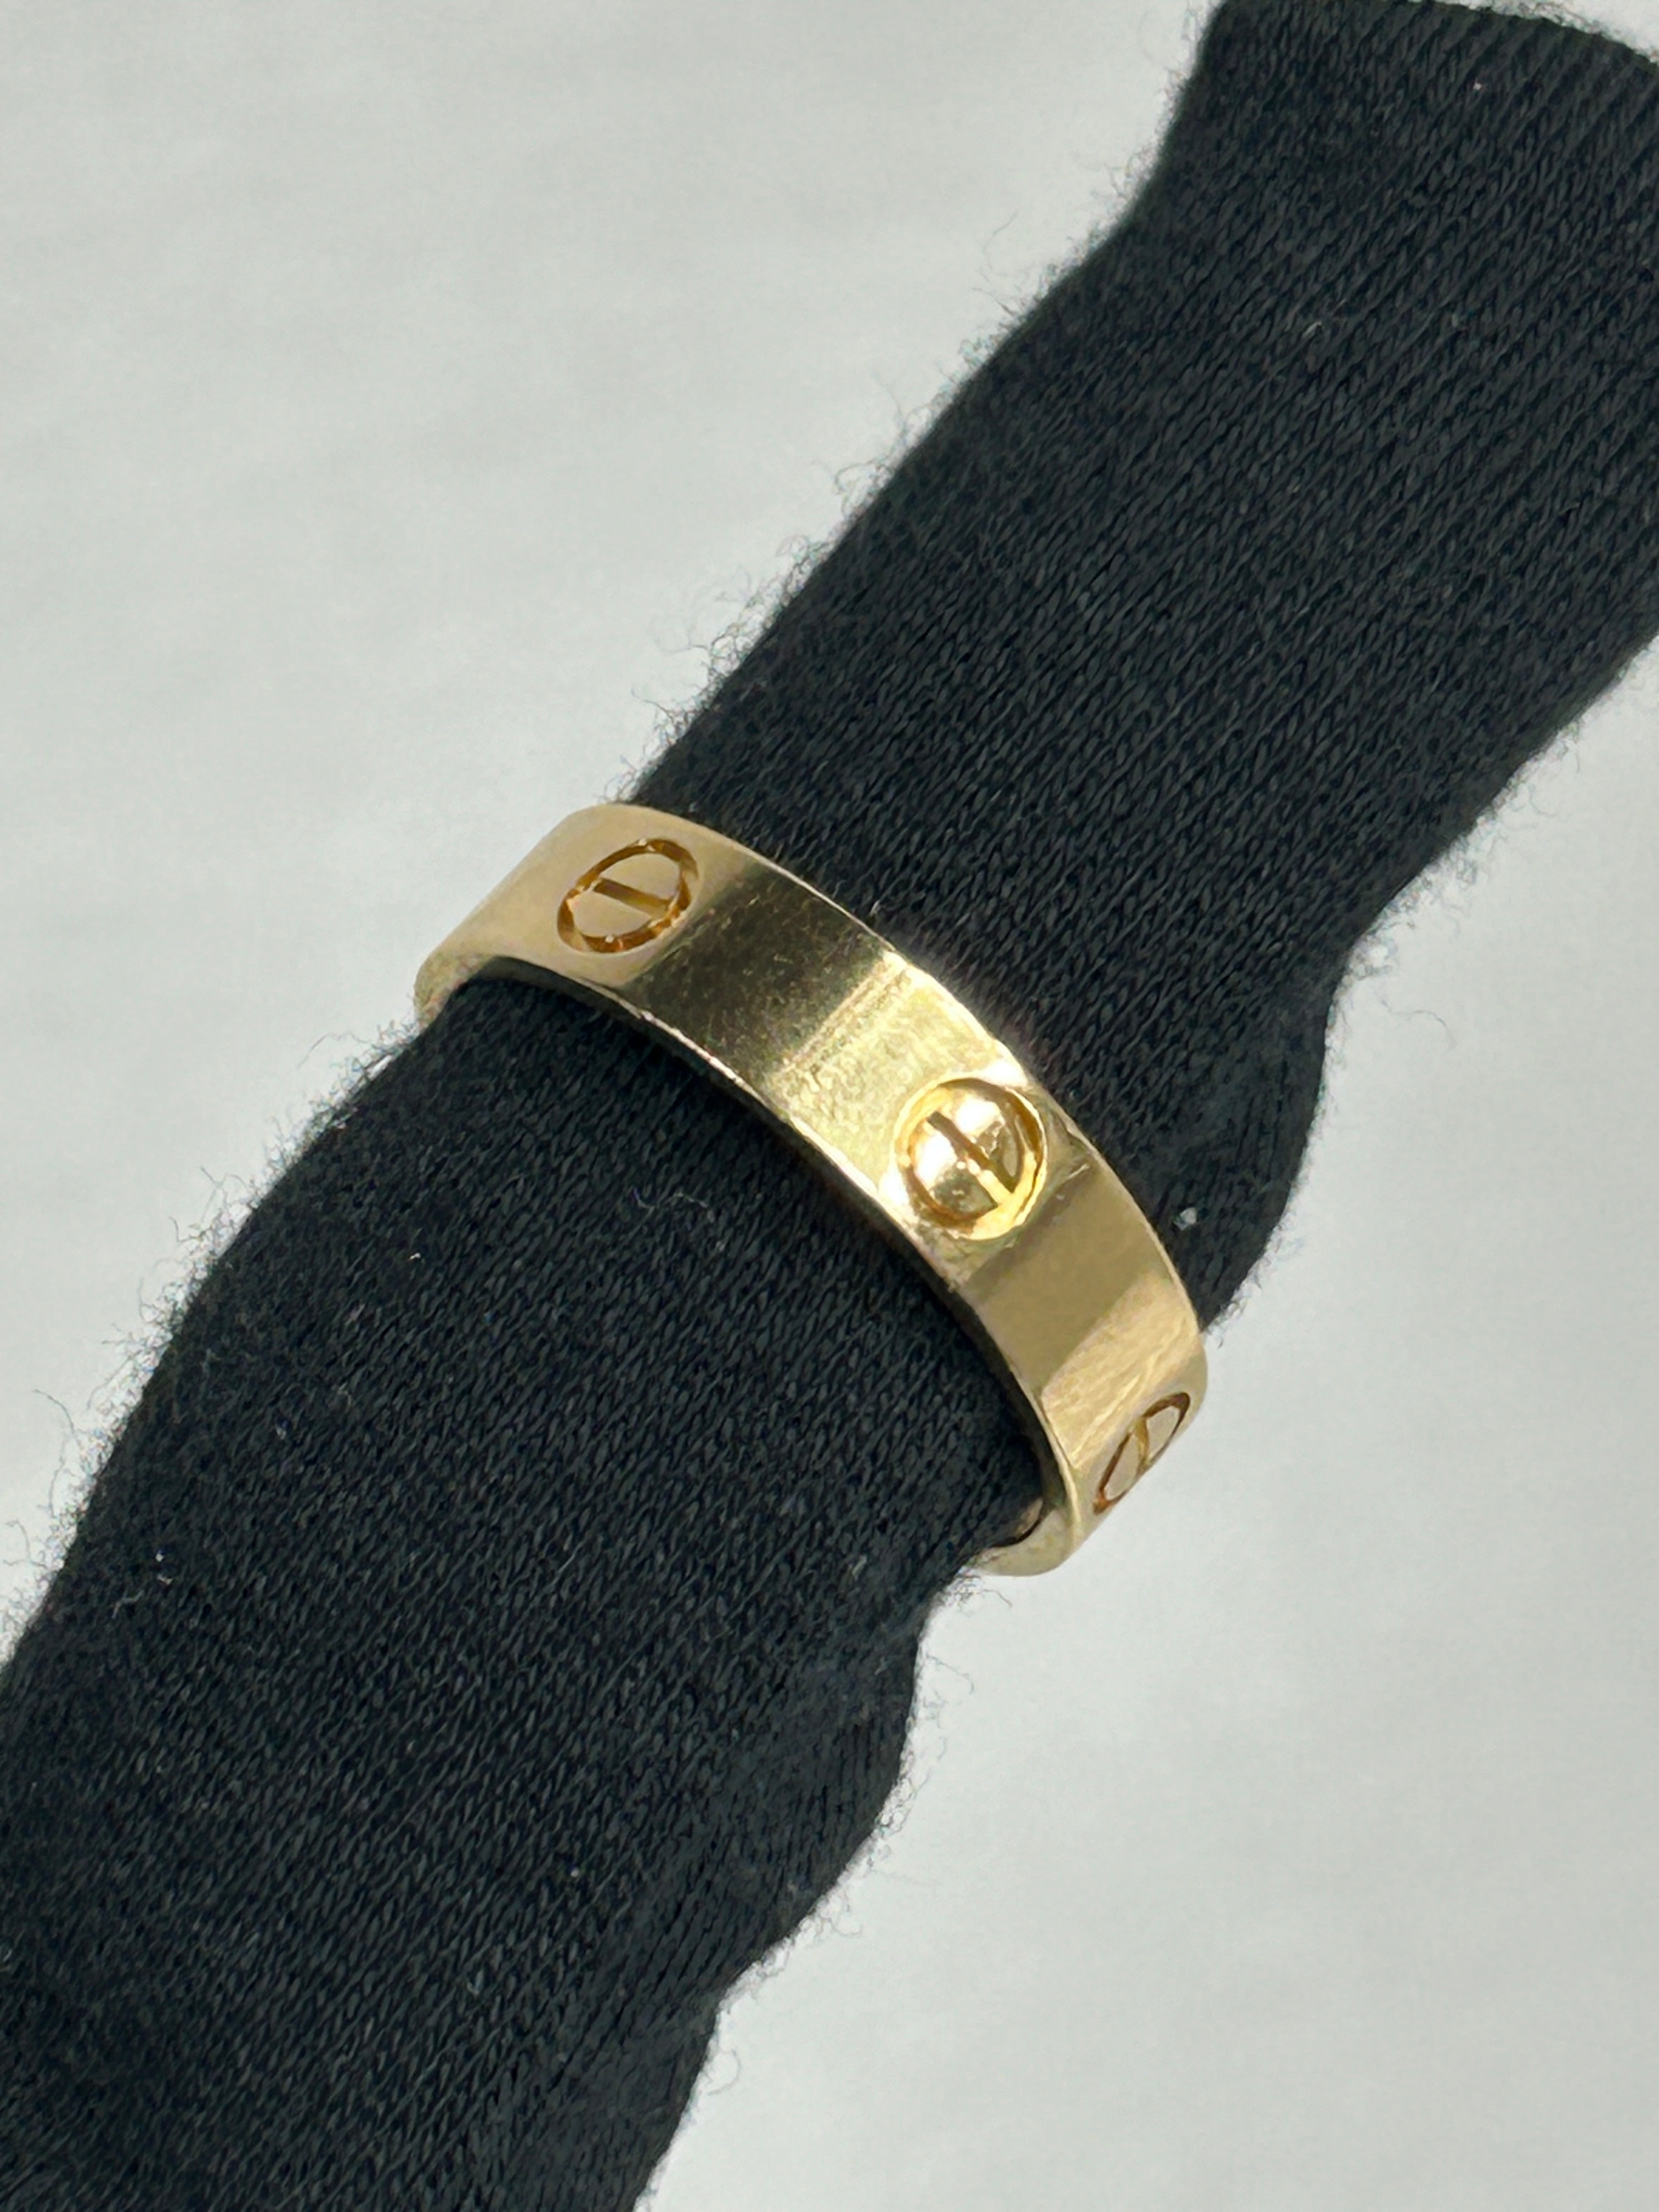 18K Gold Love Ring